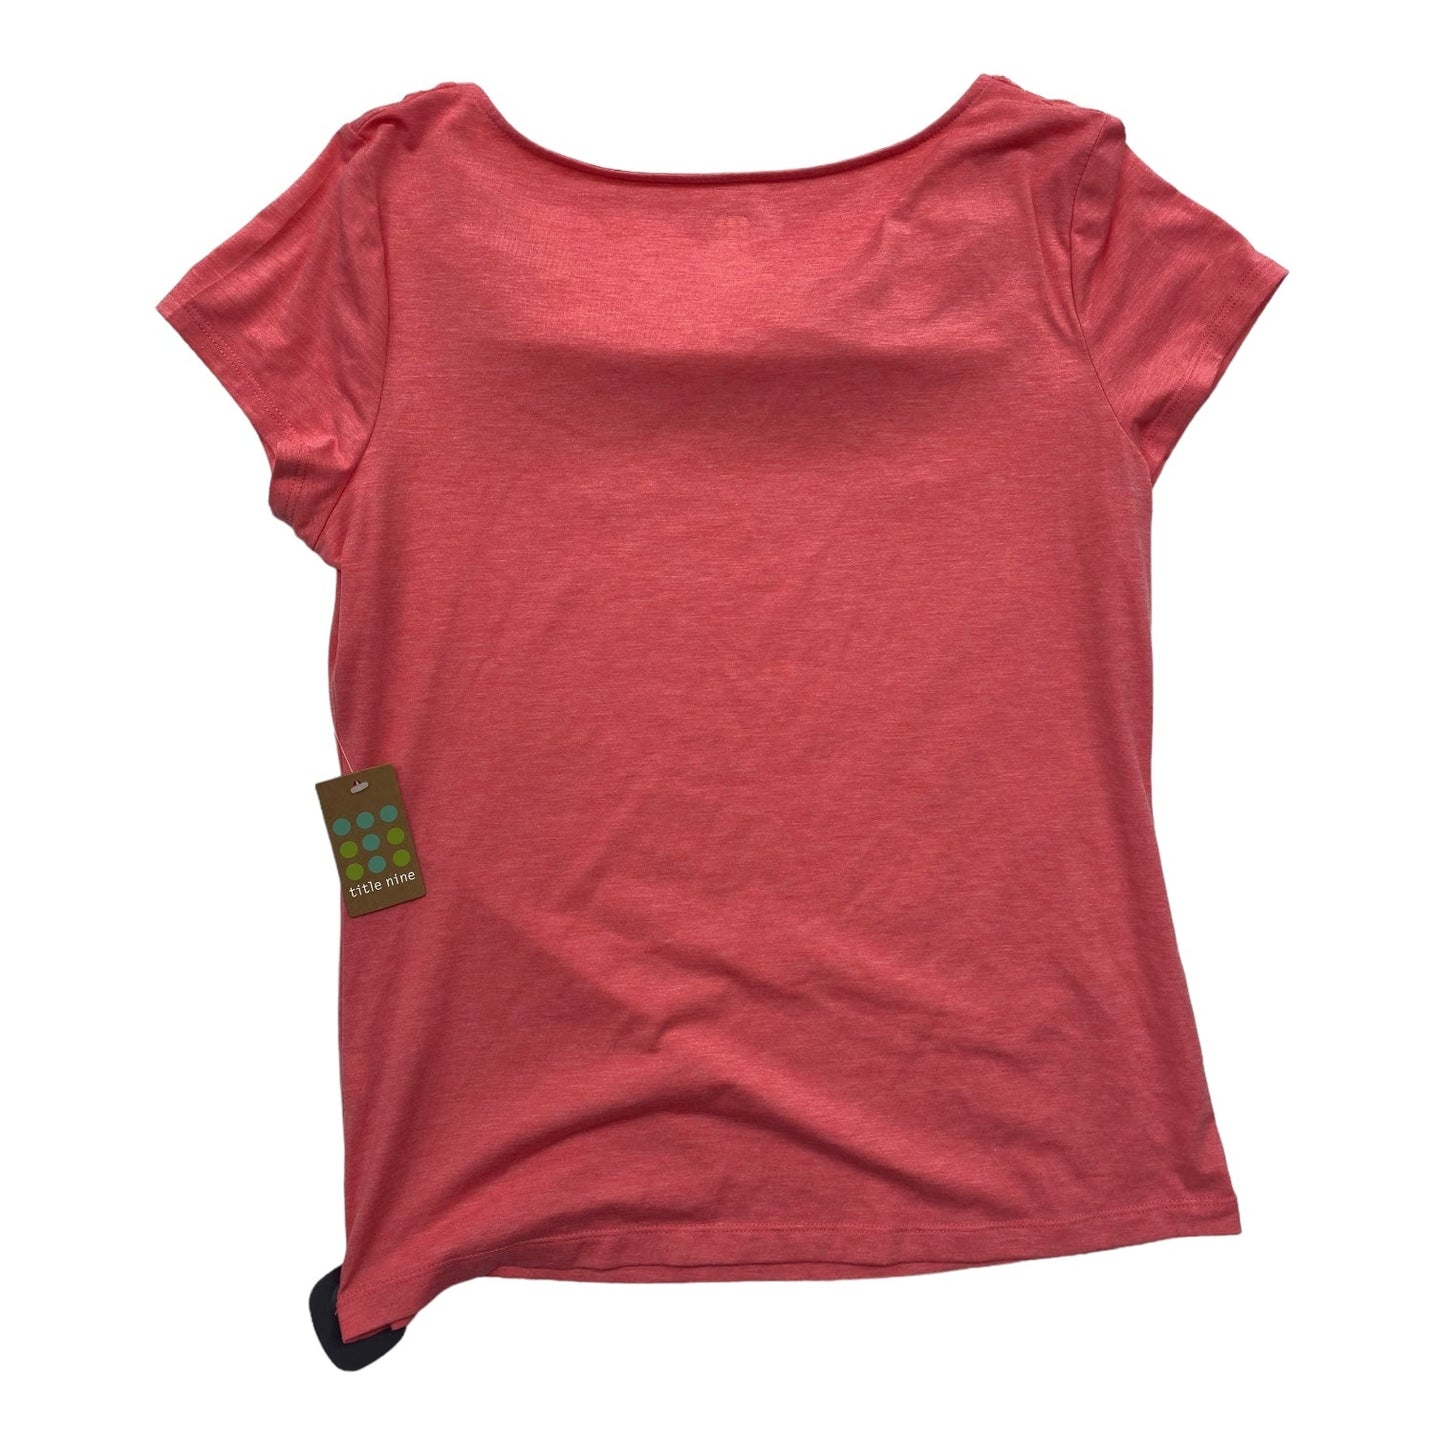 Pink Top Short Sleeve Basic Title Nine, Size M